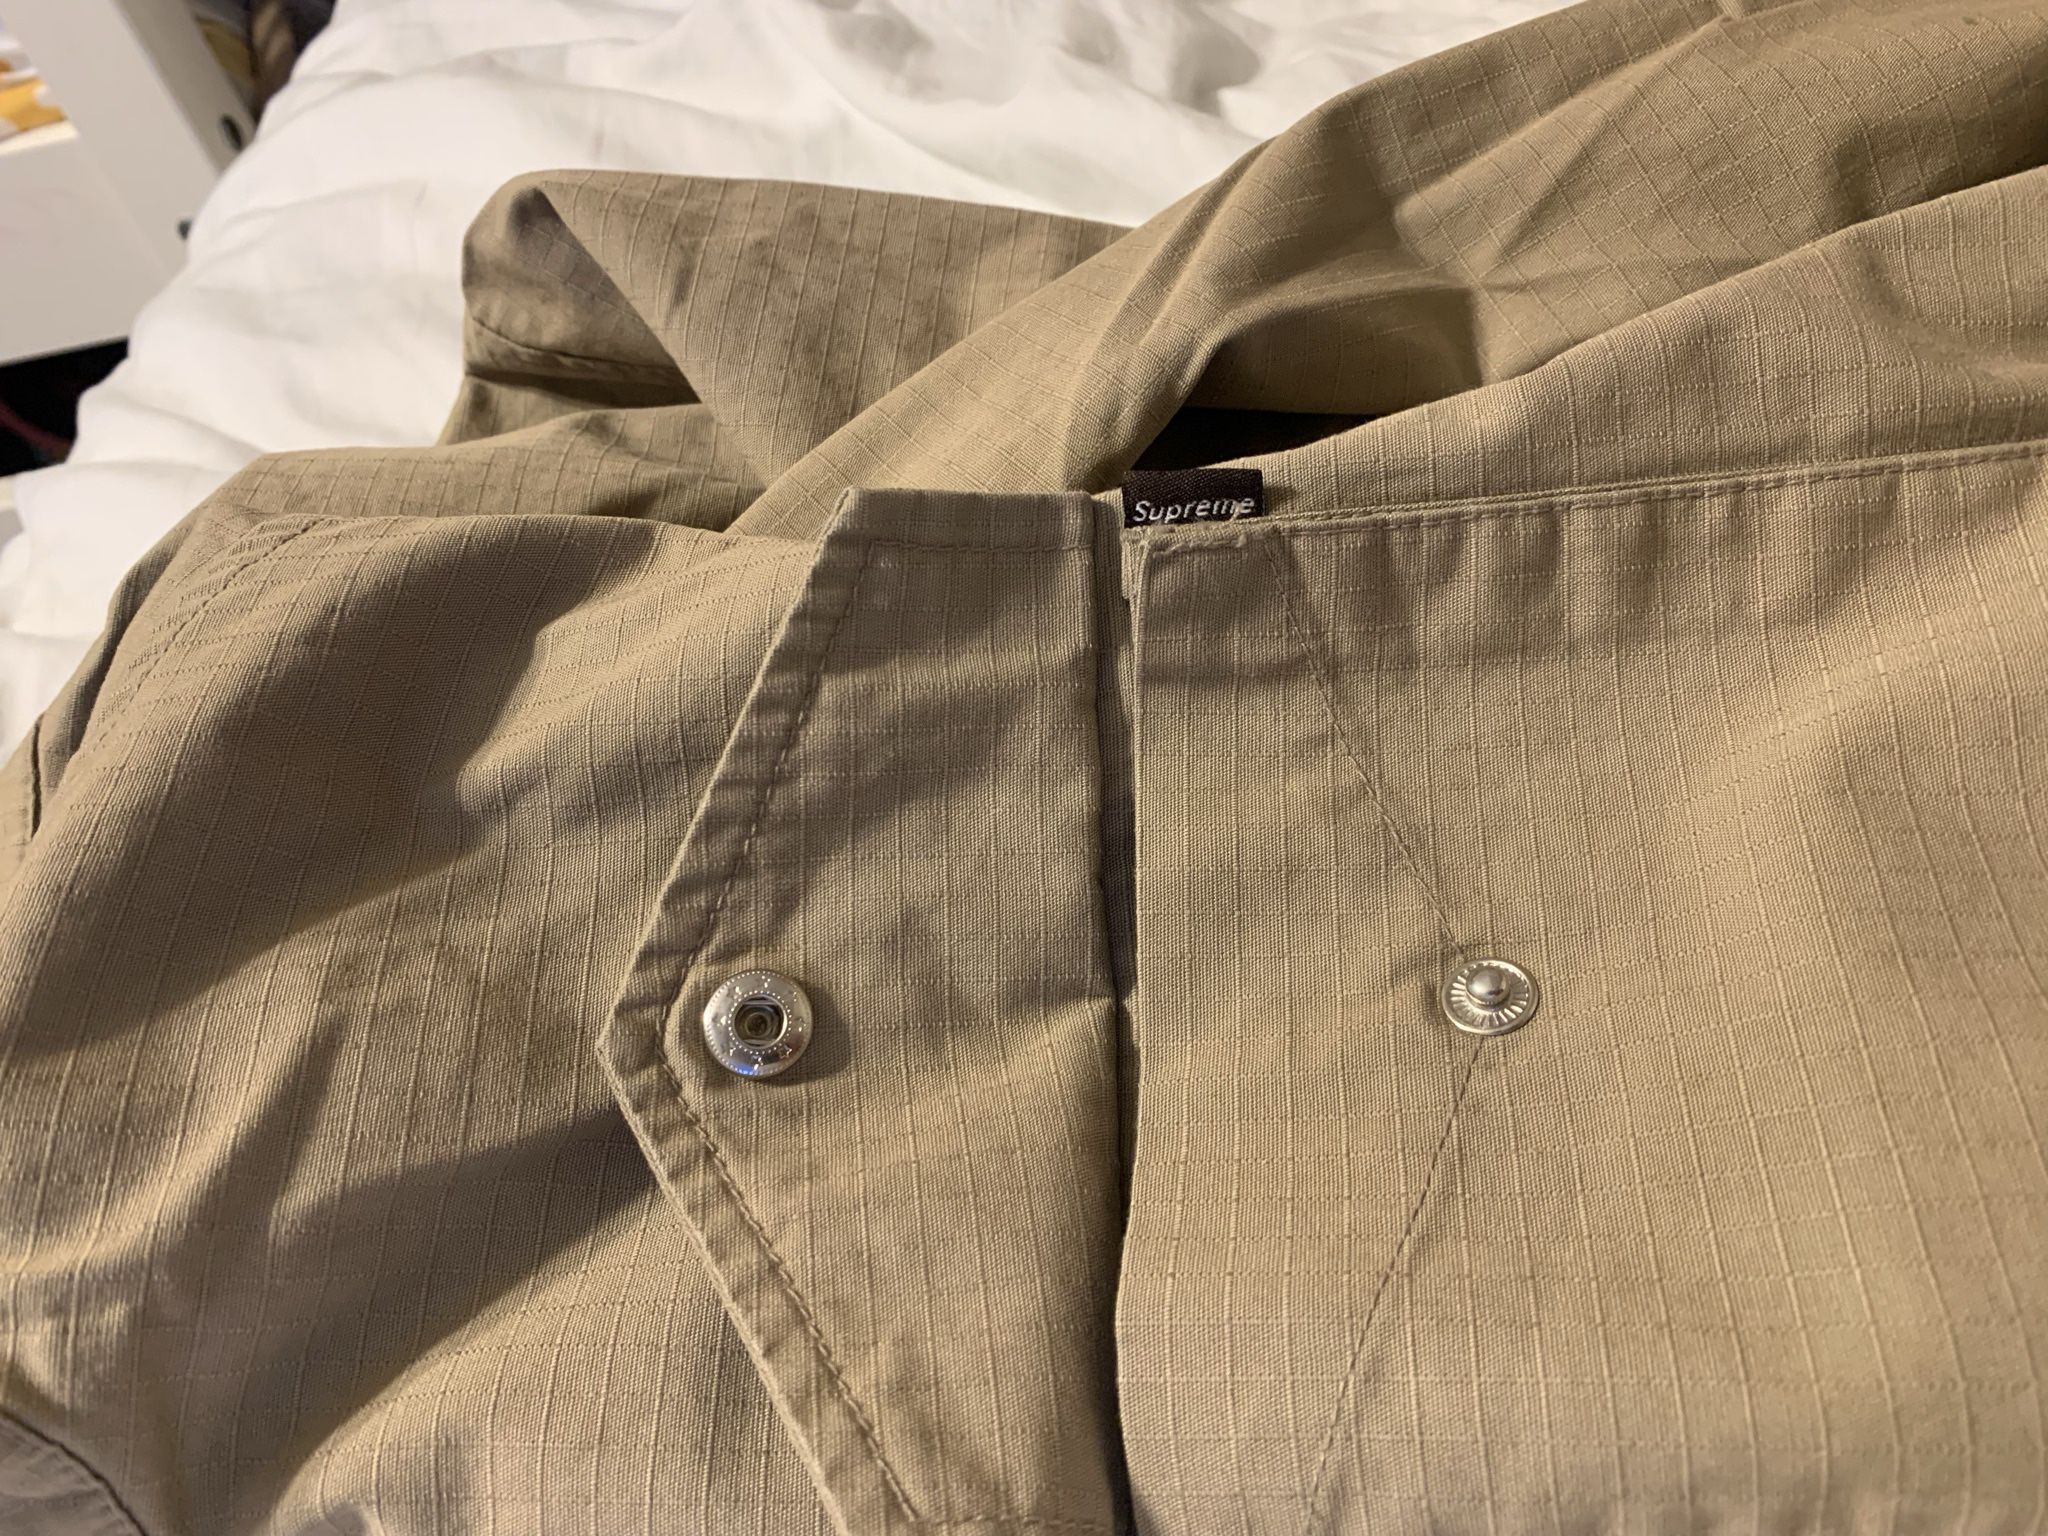 Sample Supreme Ripstop BDU Shirt Jacket Khaki Medium Largr 2009 RARE M65